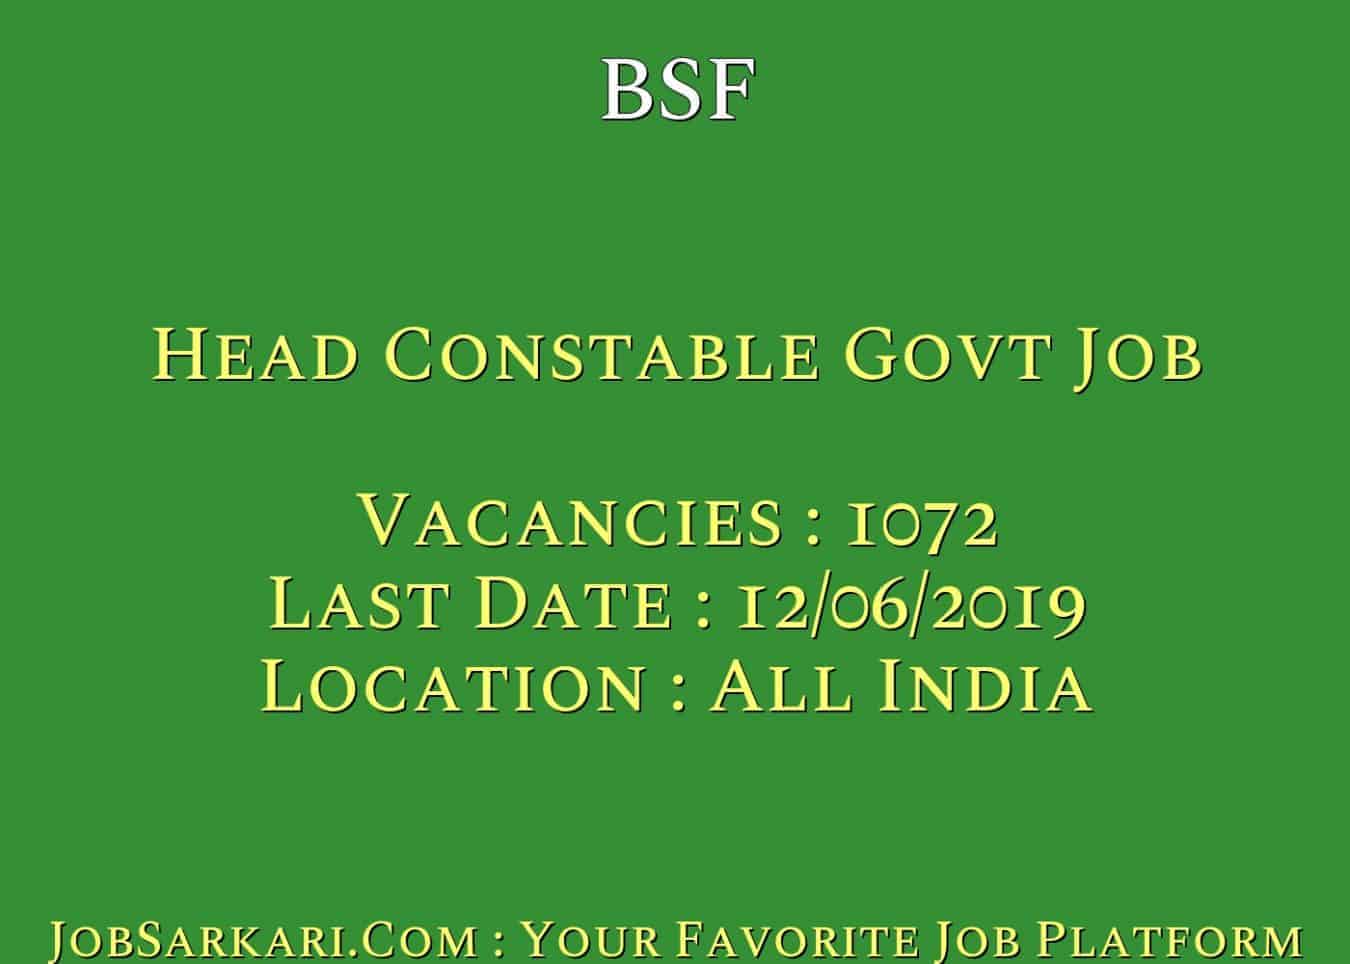 BSF Recruitment 2019 For Head Constable Govt Job